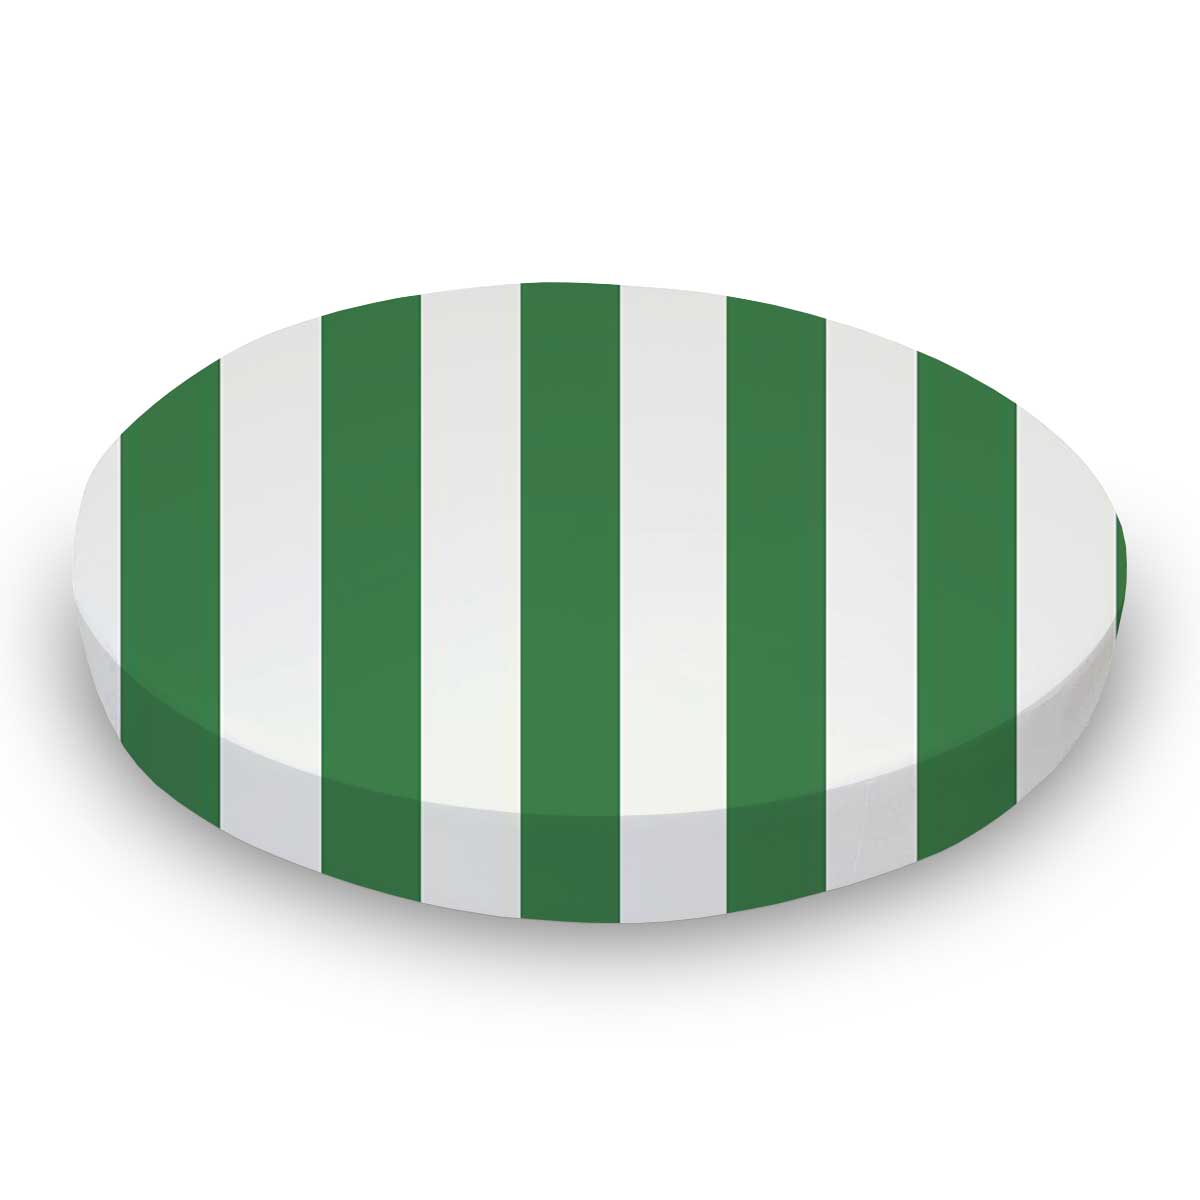 Oval Crib (Stokke Sleepi) - Forest Green Stripe - Fitted  Oval